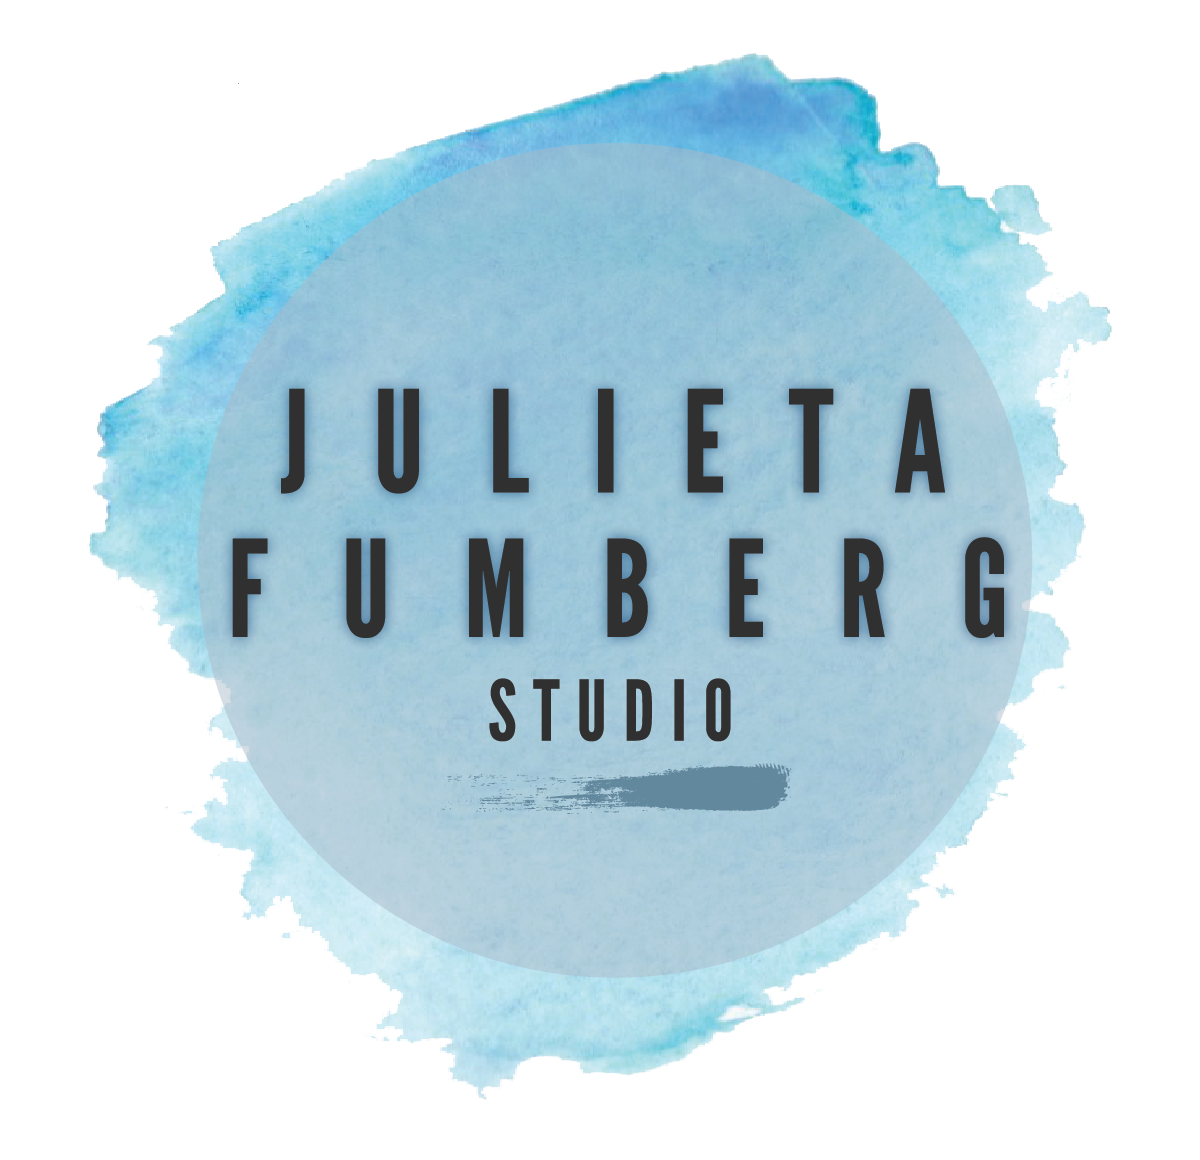 Julieta Fumberg Studio